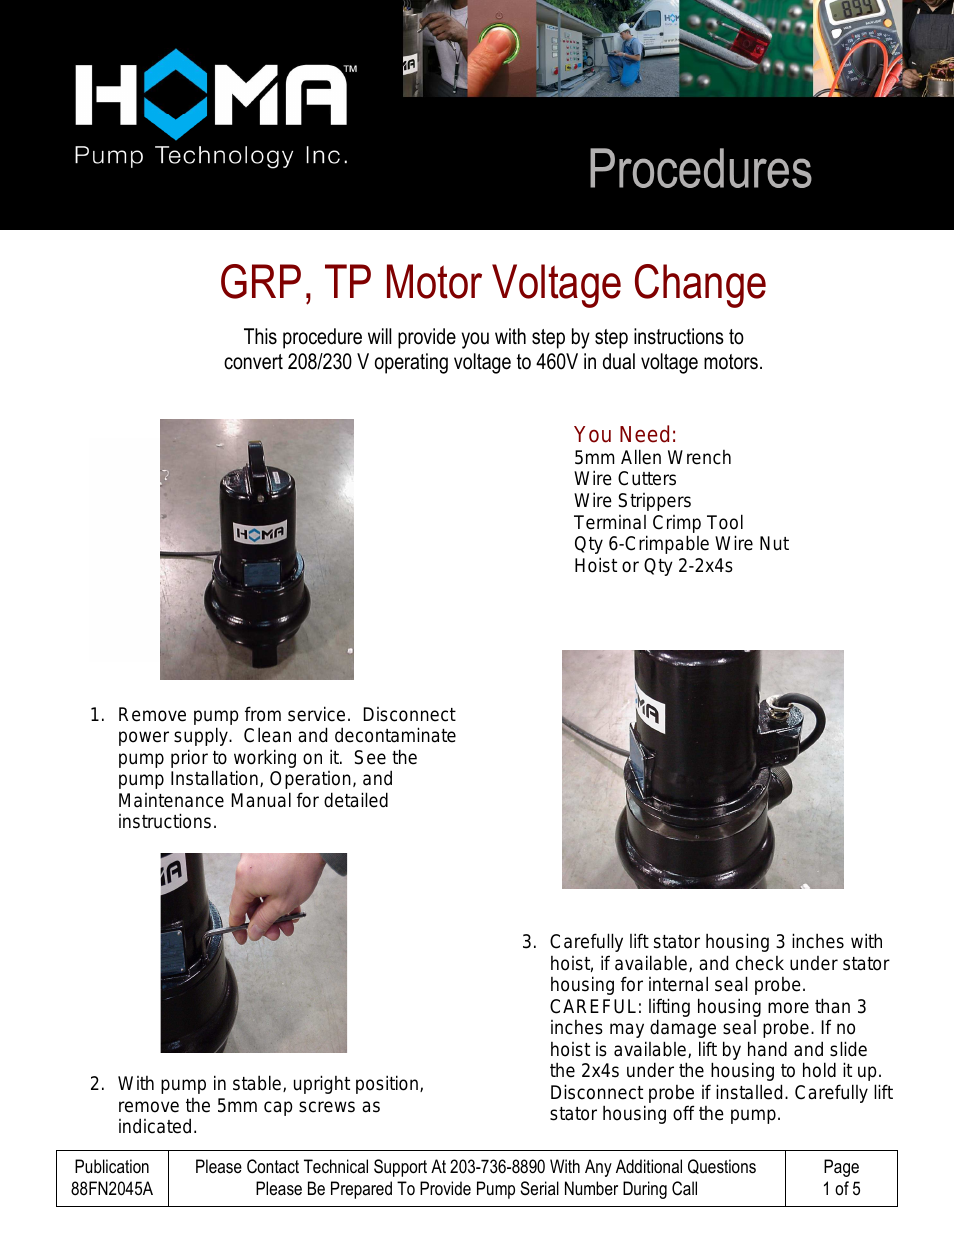 GRP TP Motor Voltage Change